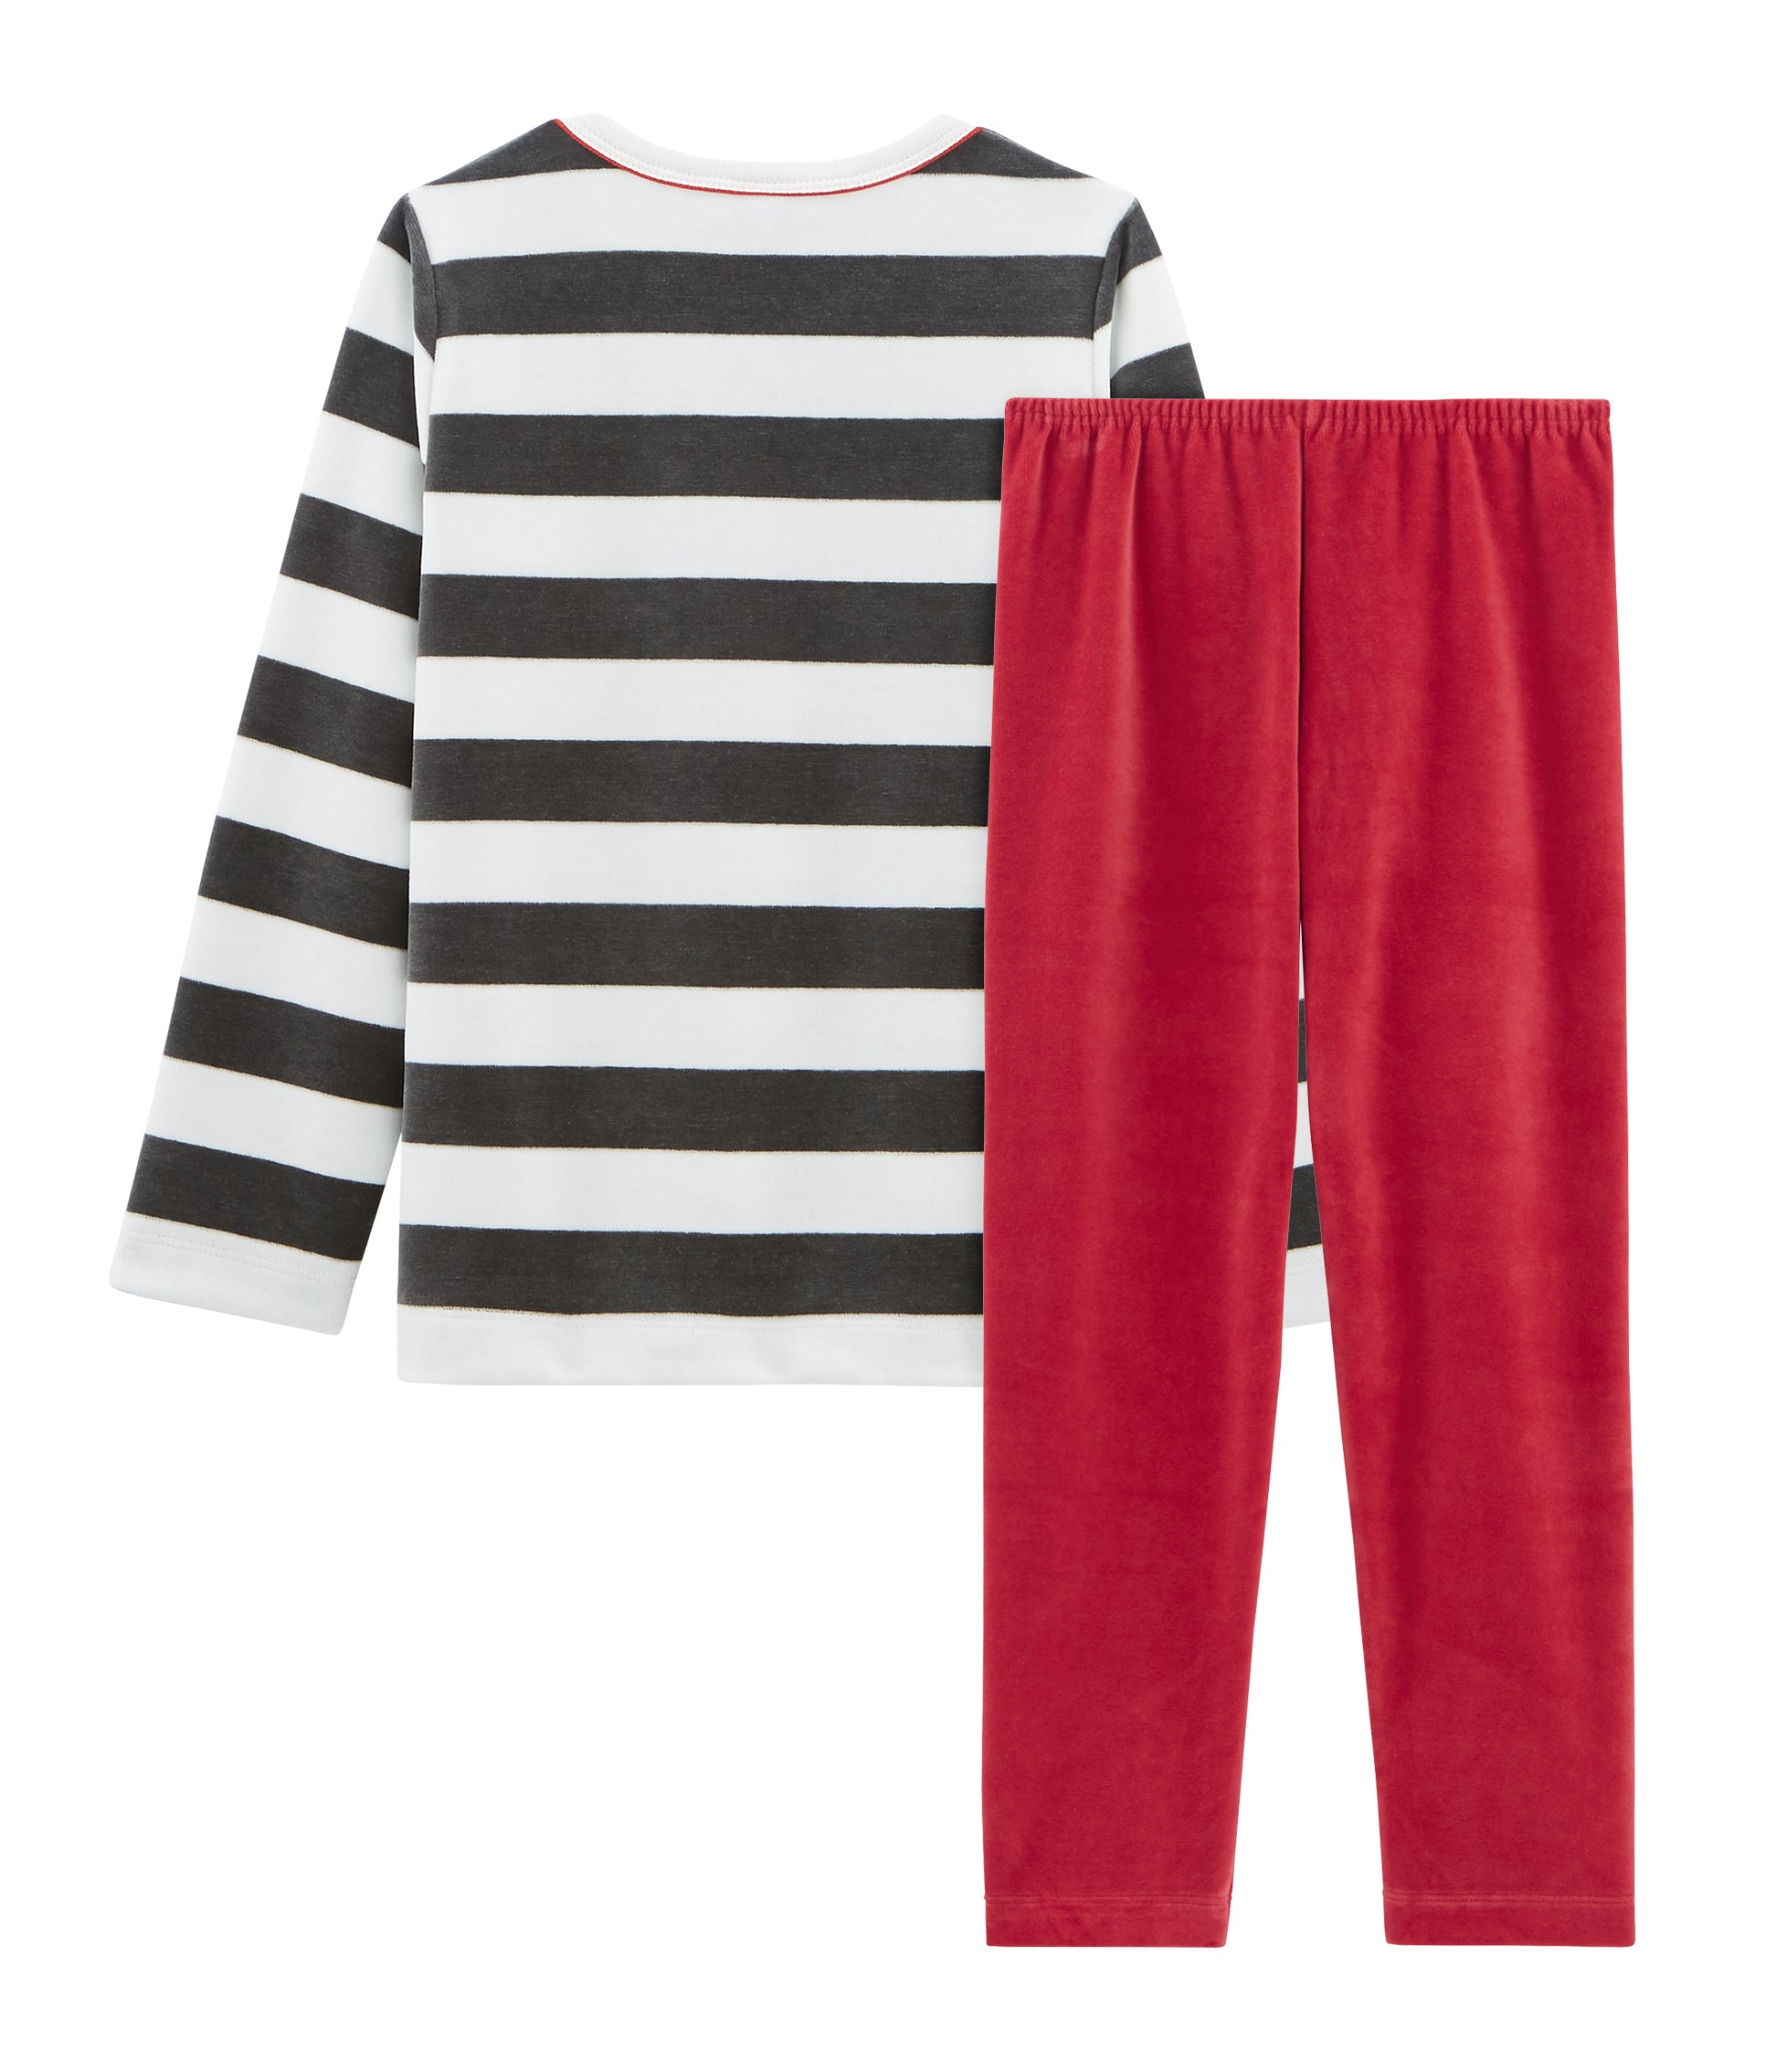 Boys Black & Red Cotton Nightwear Set